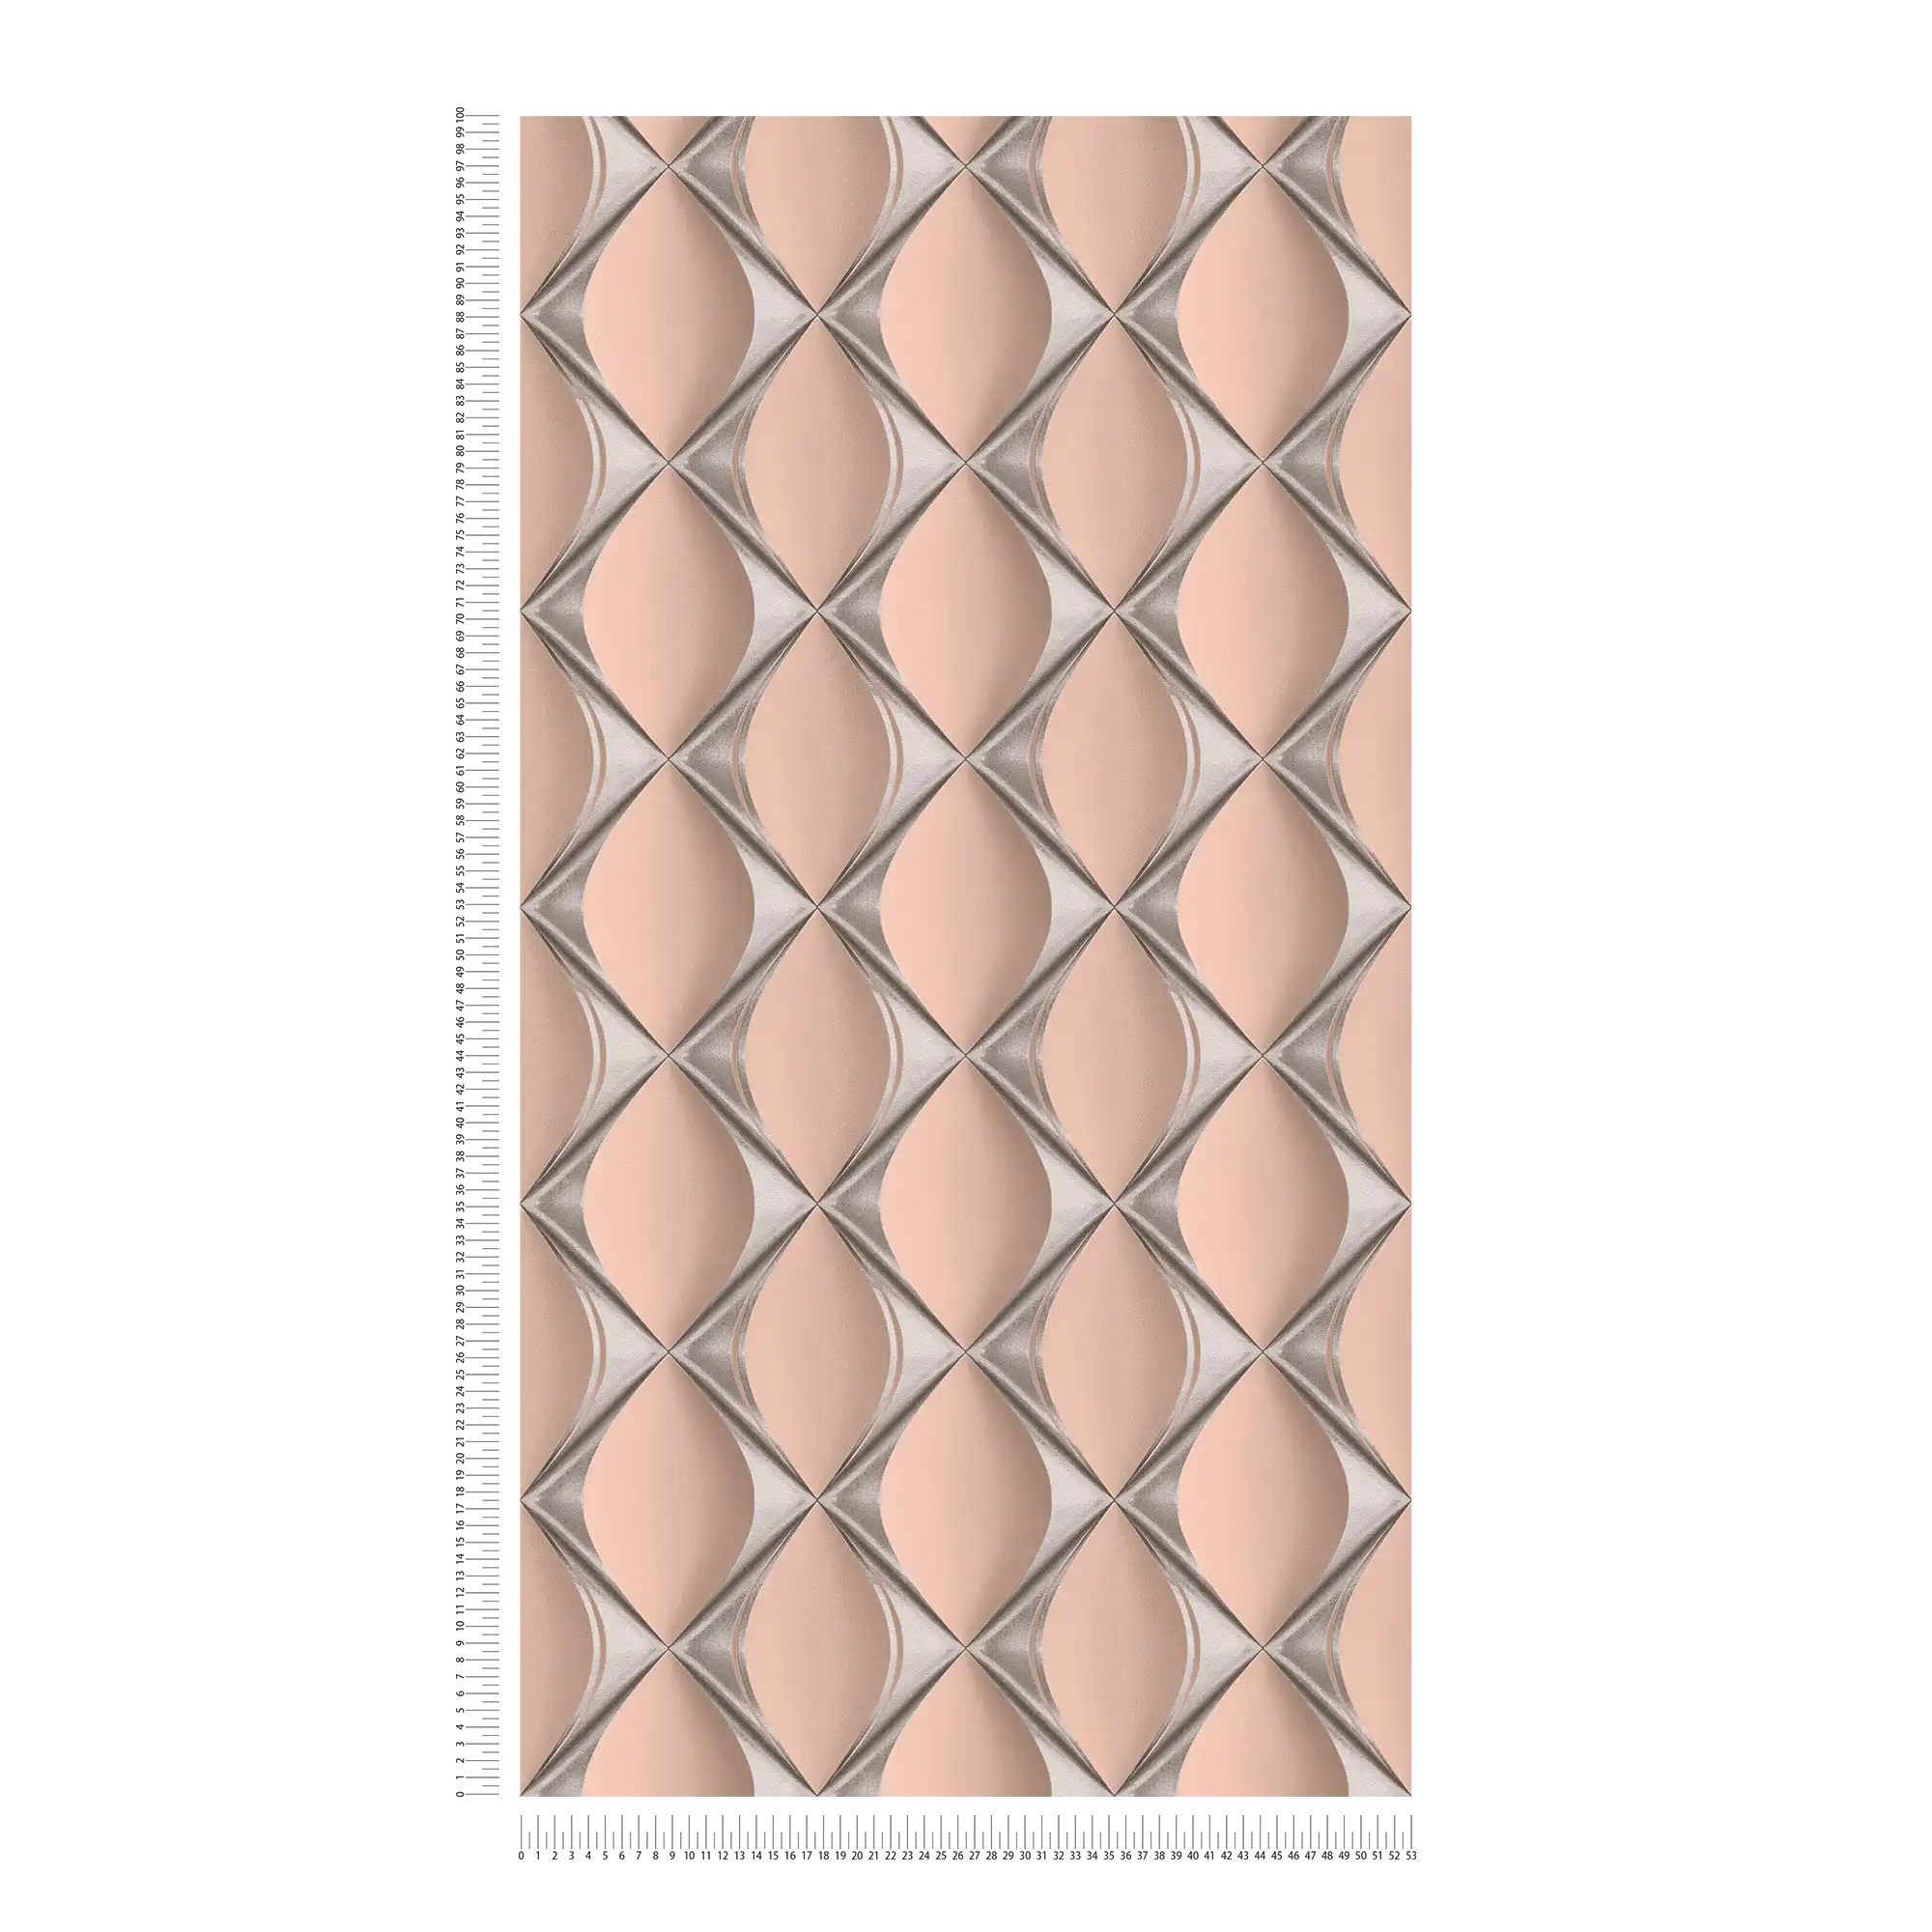             Design Tapete 3D mit Metallic Rauten Muster – Rosa, Metallic
        